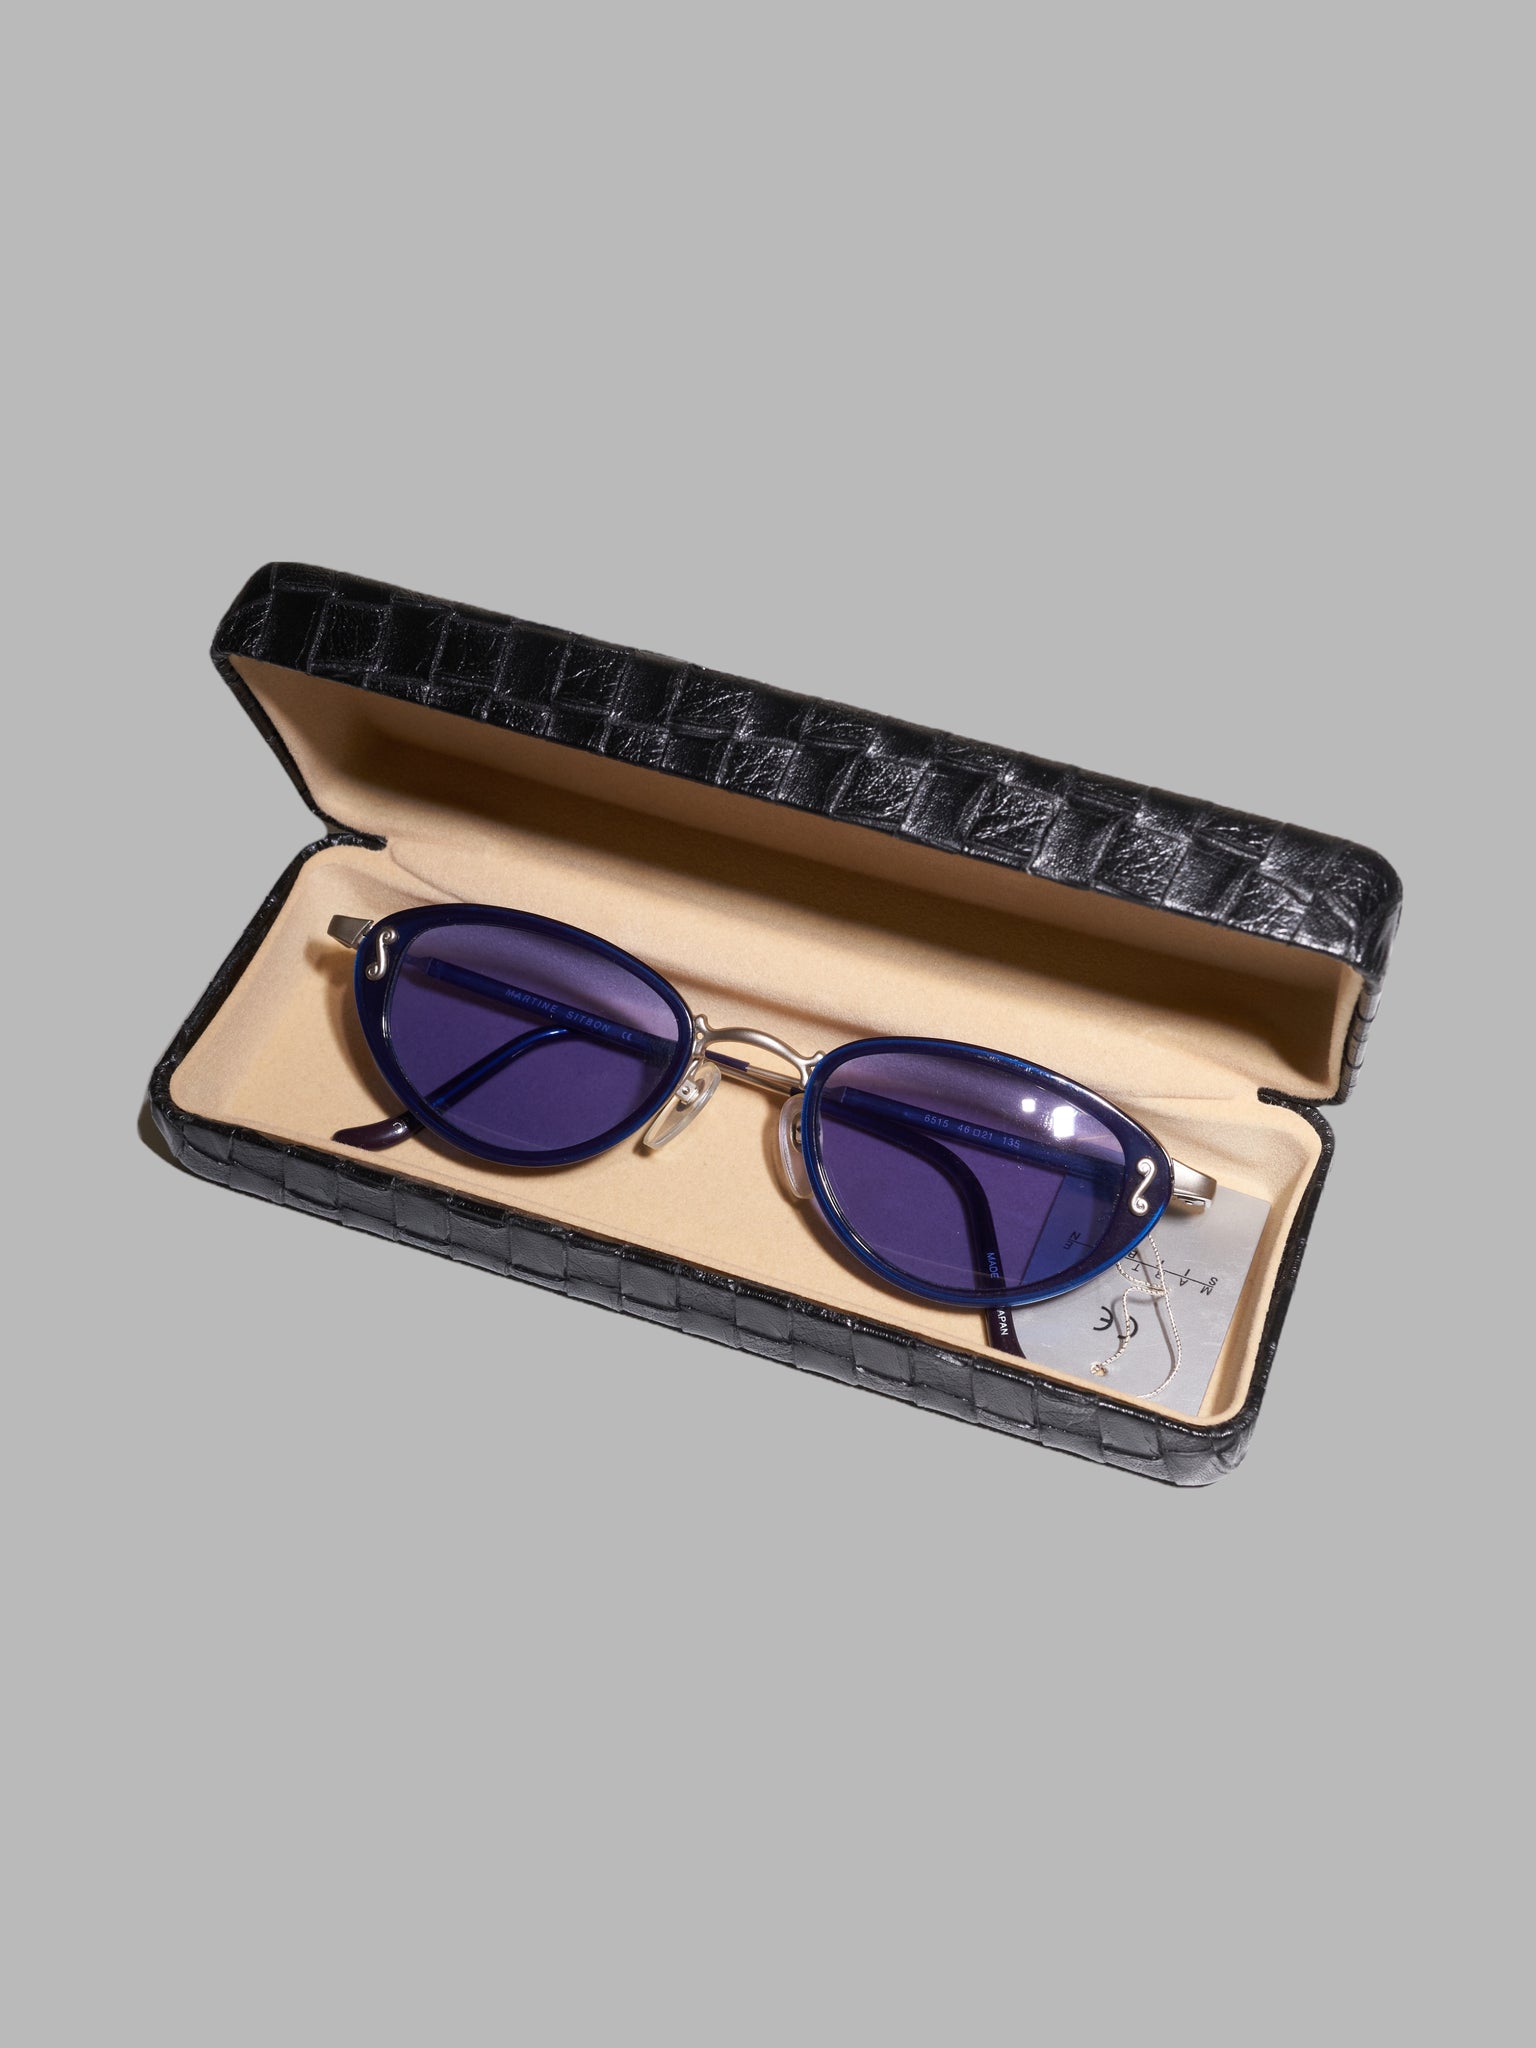 Martine Sitbon dark blue sunglasses with lighter blue lenses